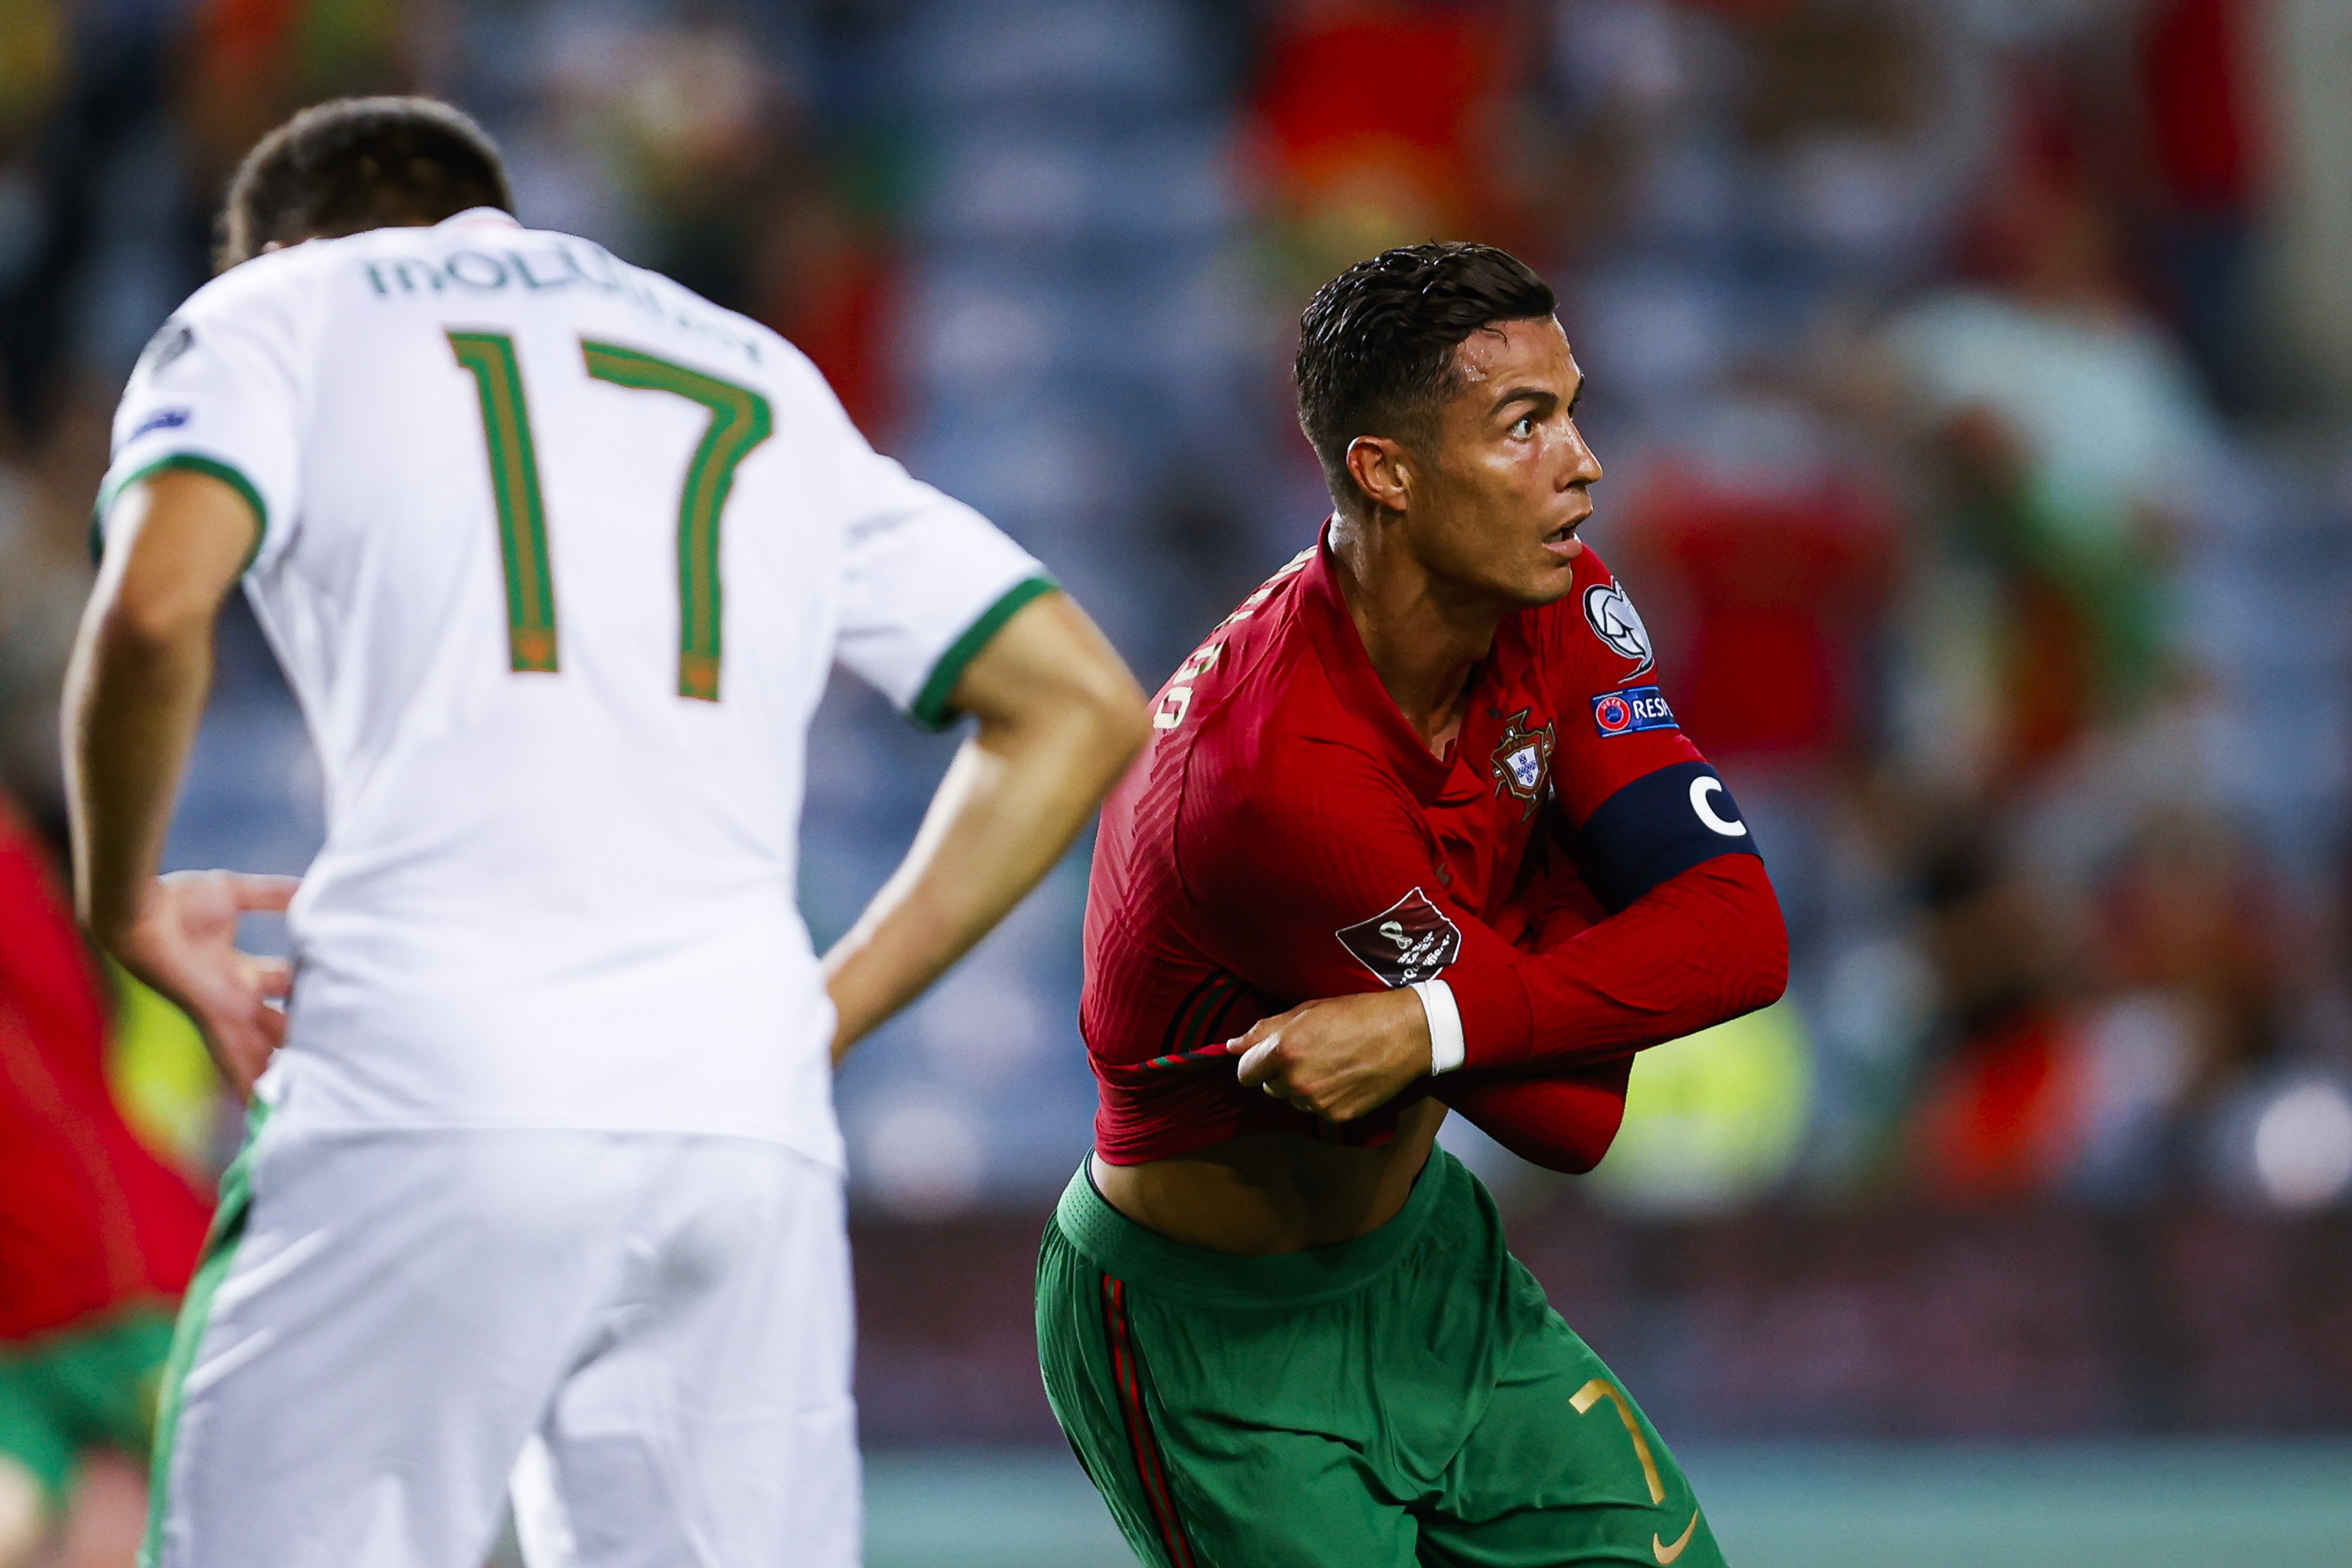 Cetak 111 Gol di Portugal, Cristiano Ronaldo Pecahkan Rekor Dunia